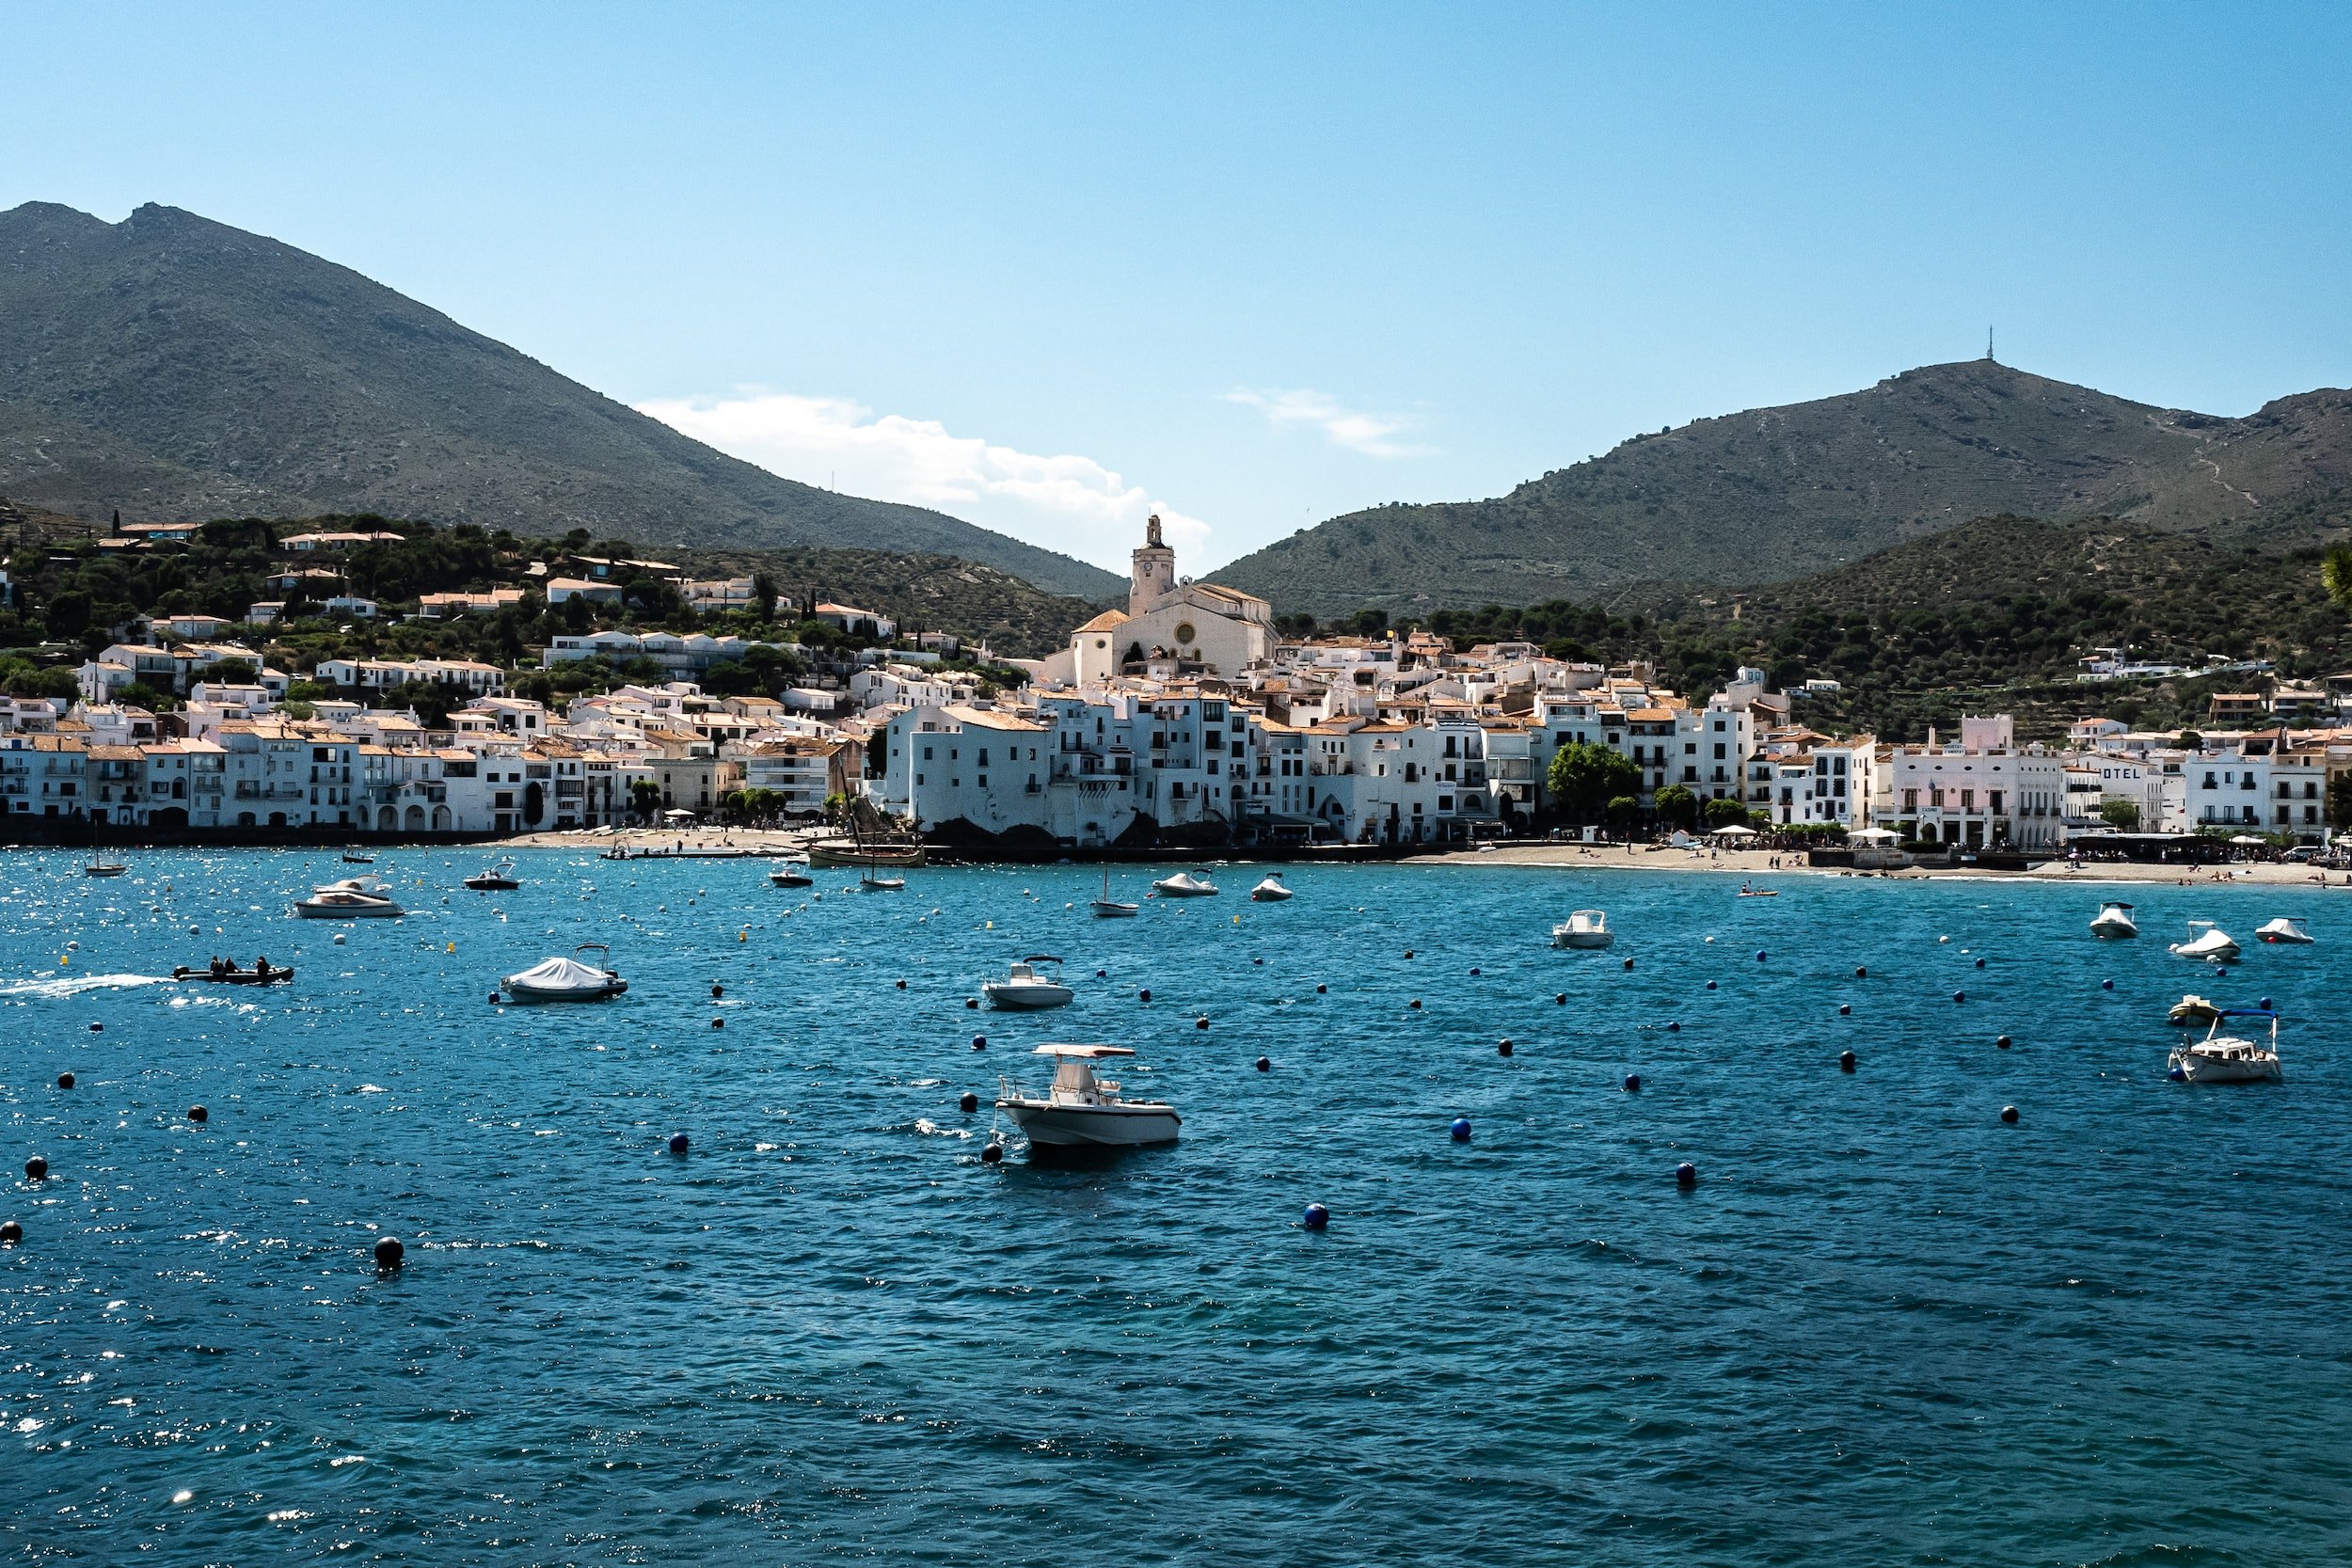 Visit the village of Cadaqués on the Mediterranean coast